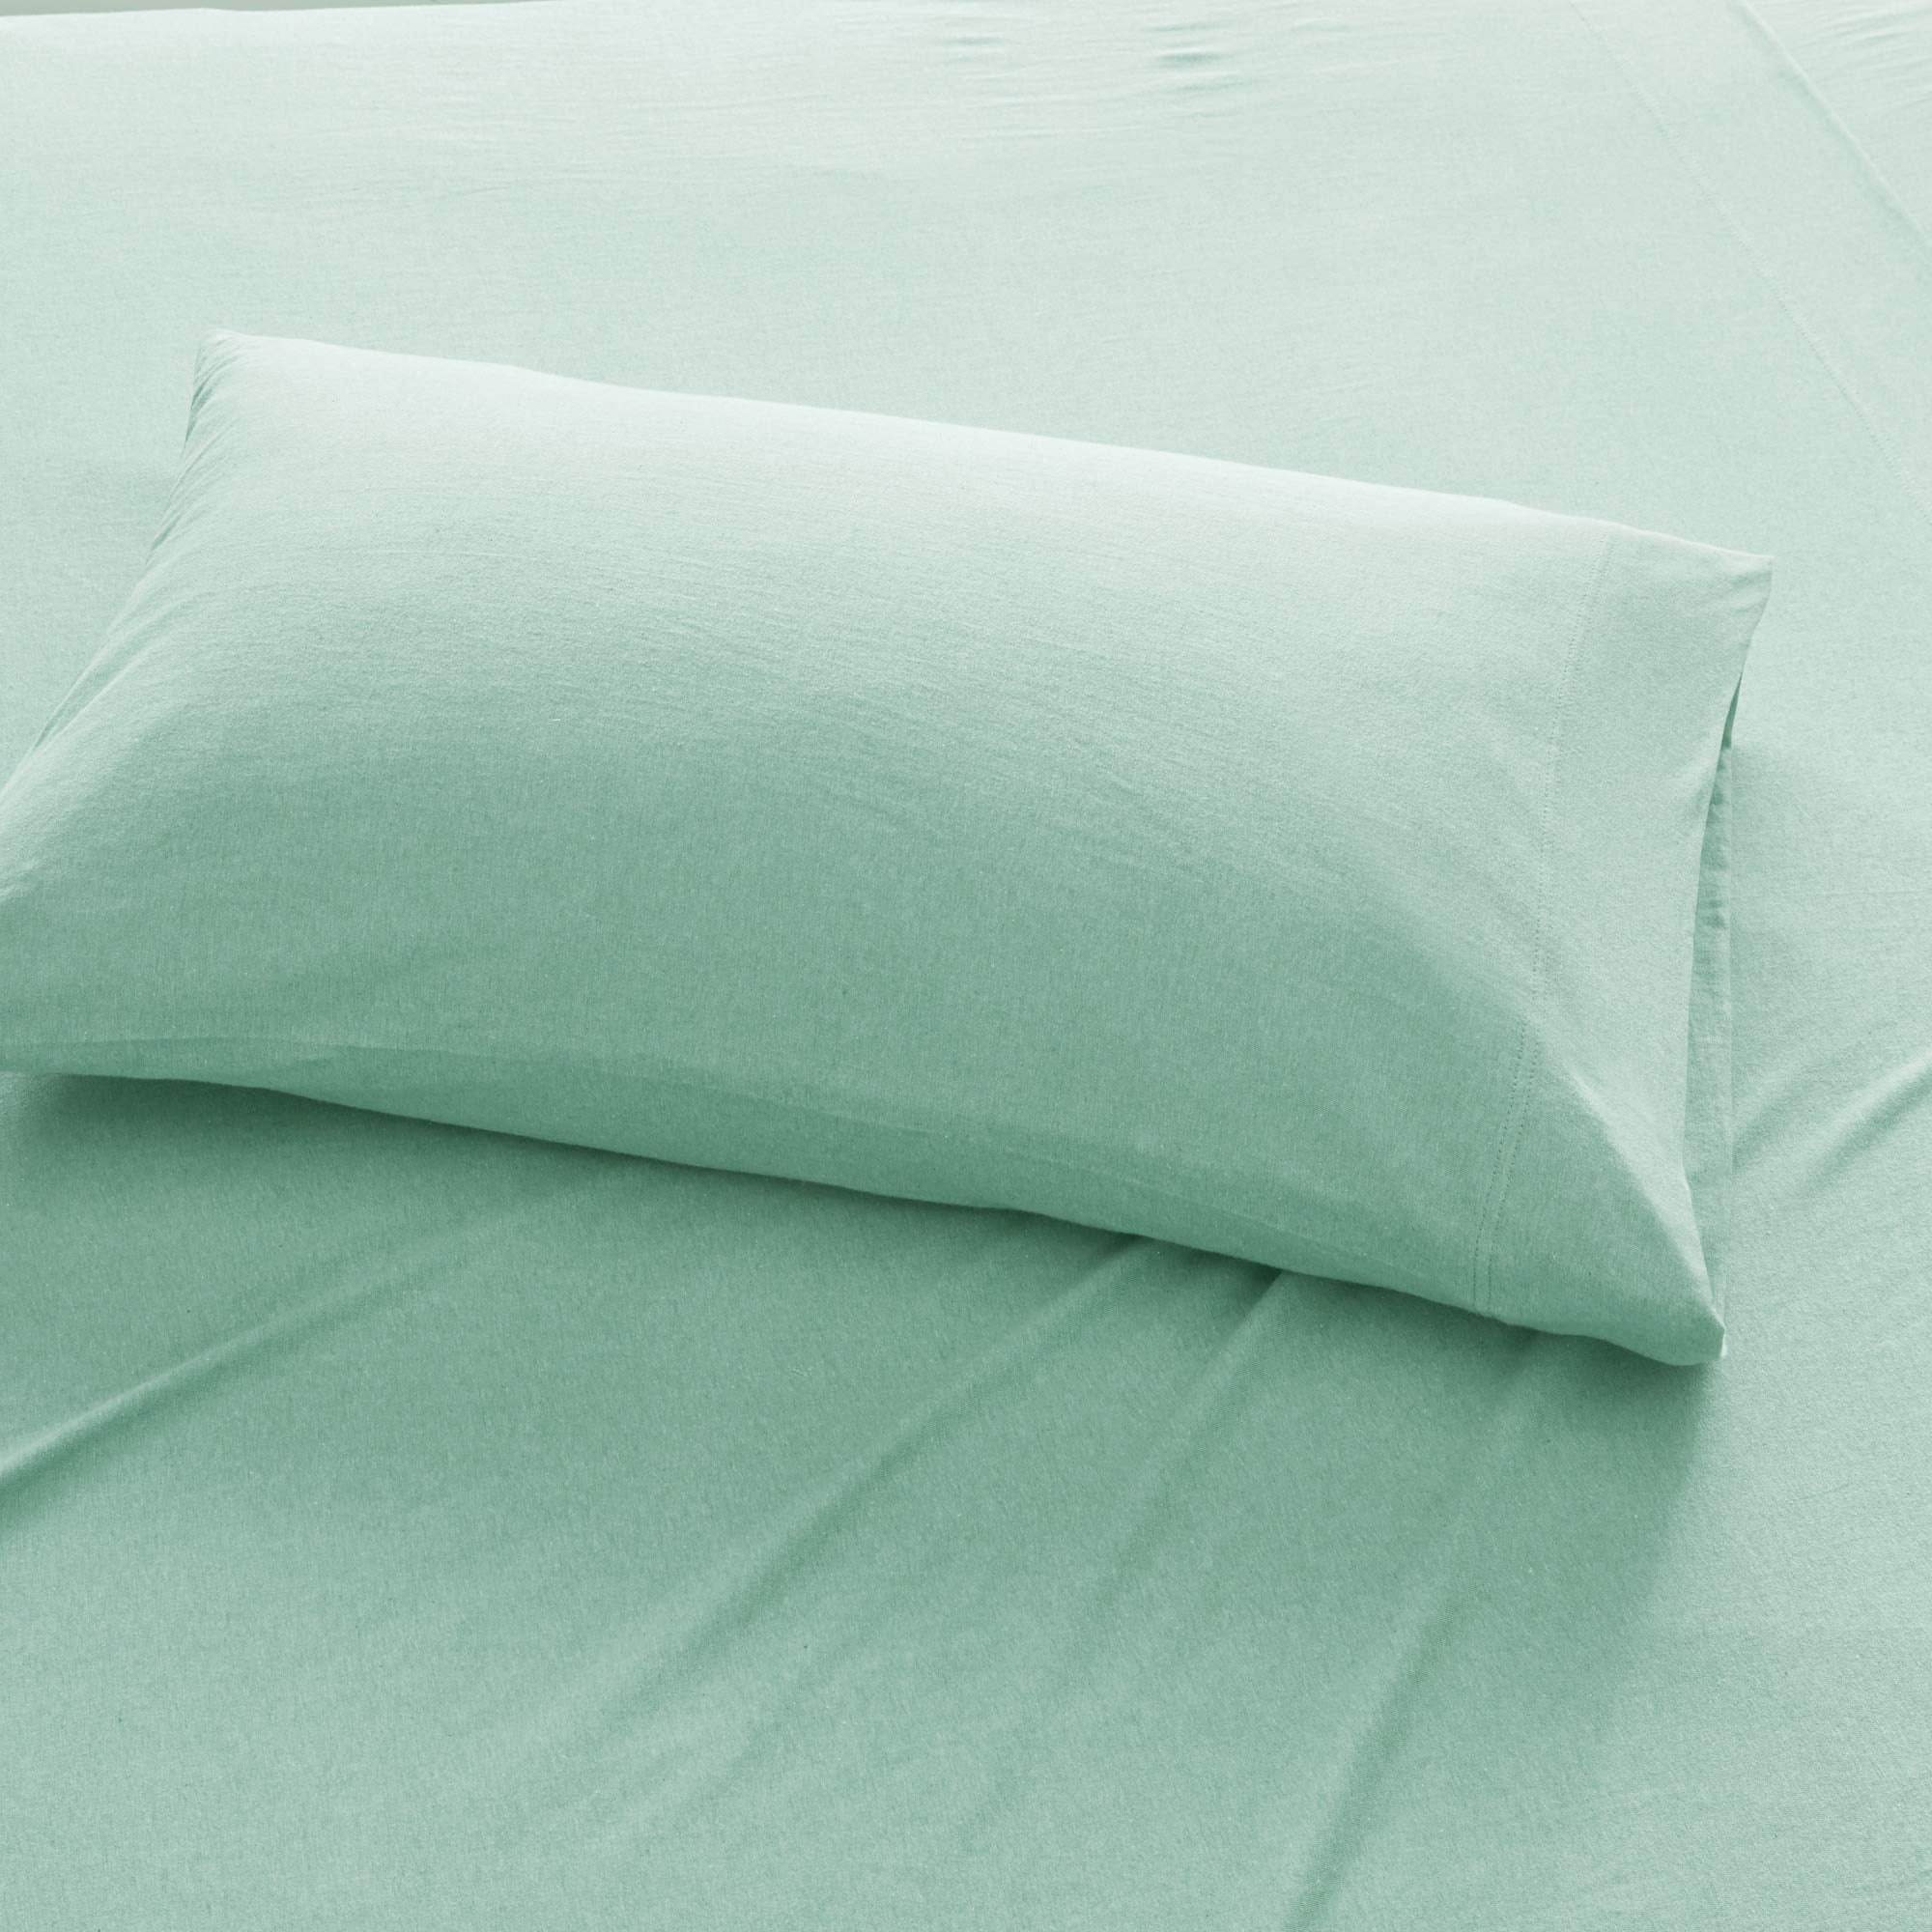 ALL SIZES Luxury Aqua Blue/Green Heathered Cotton Jersey Knit Sheet Set